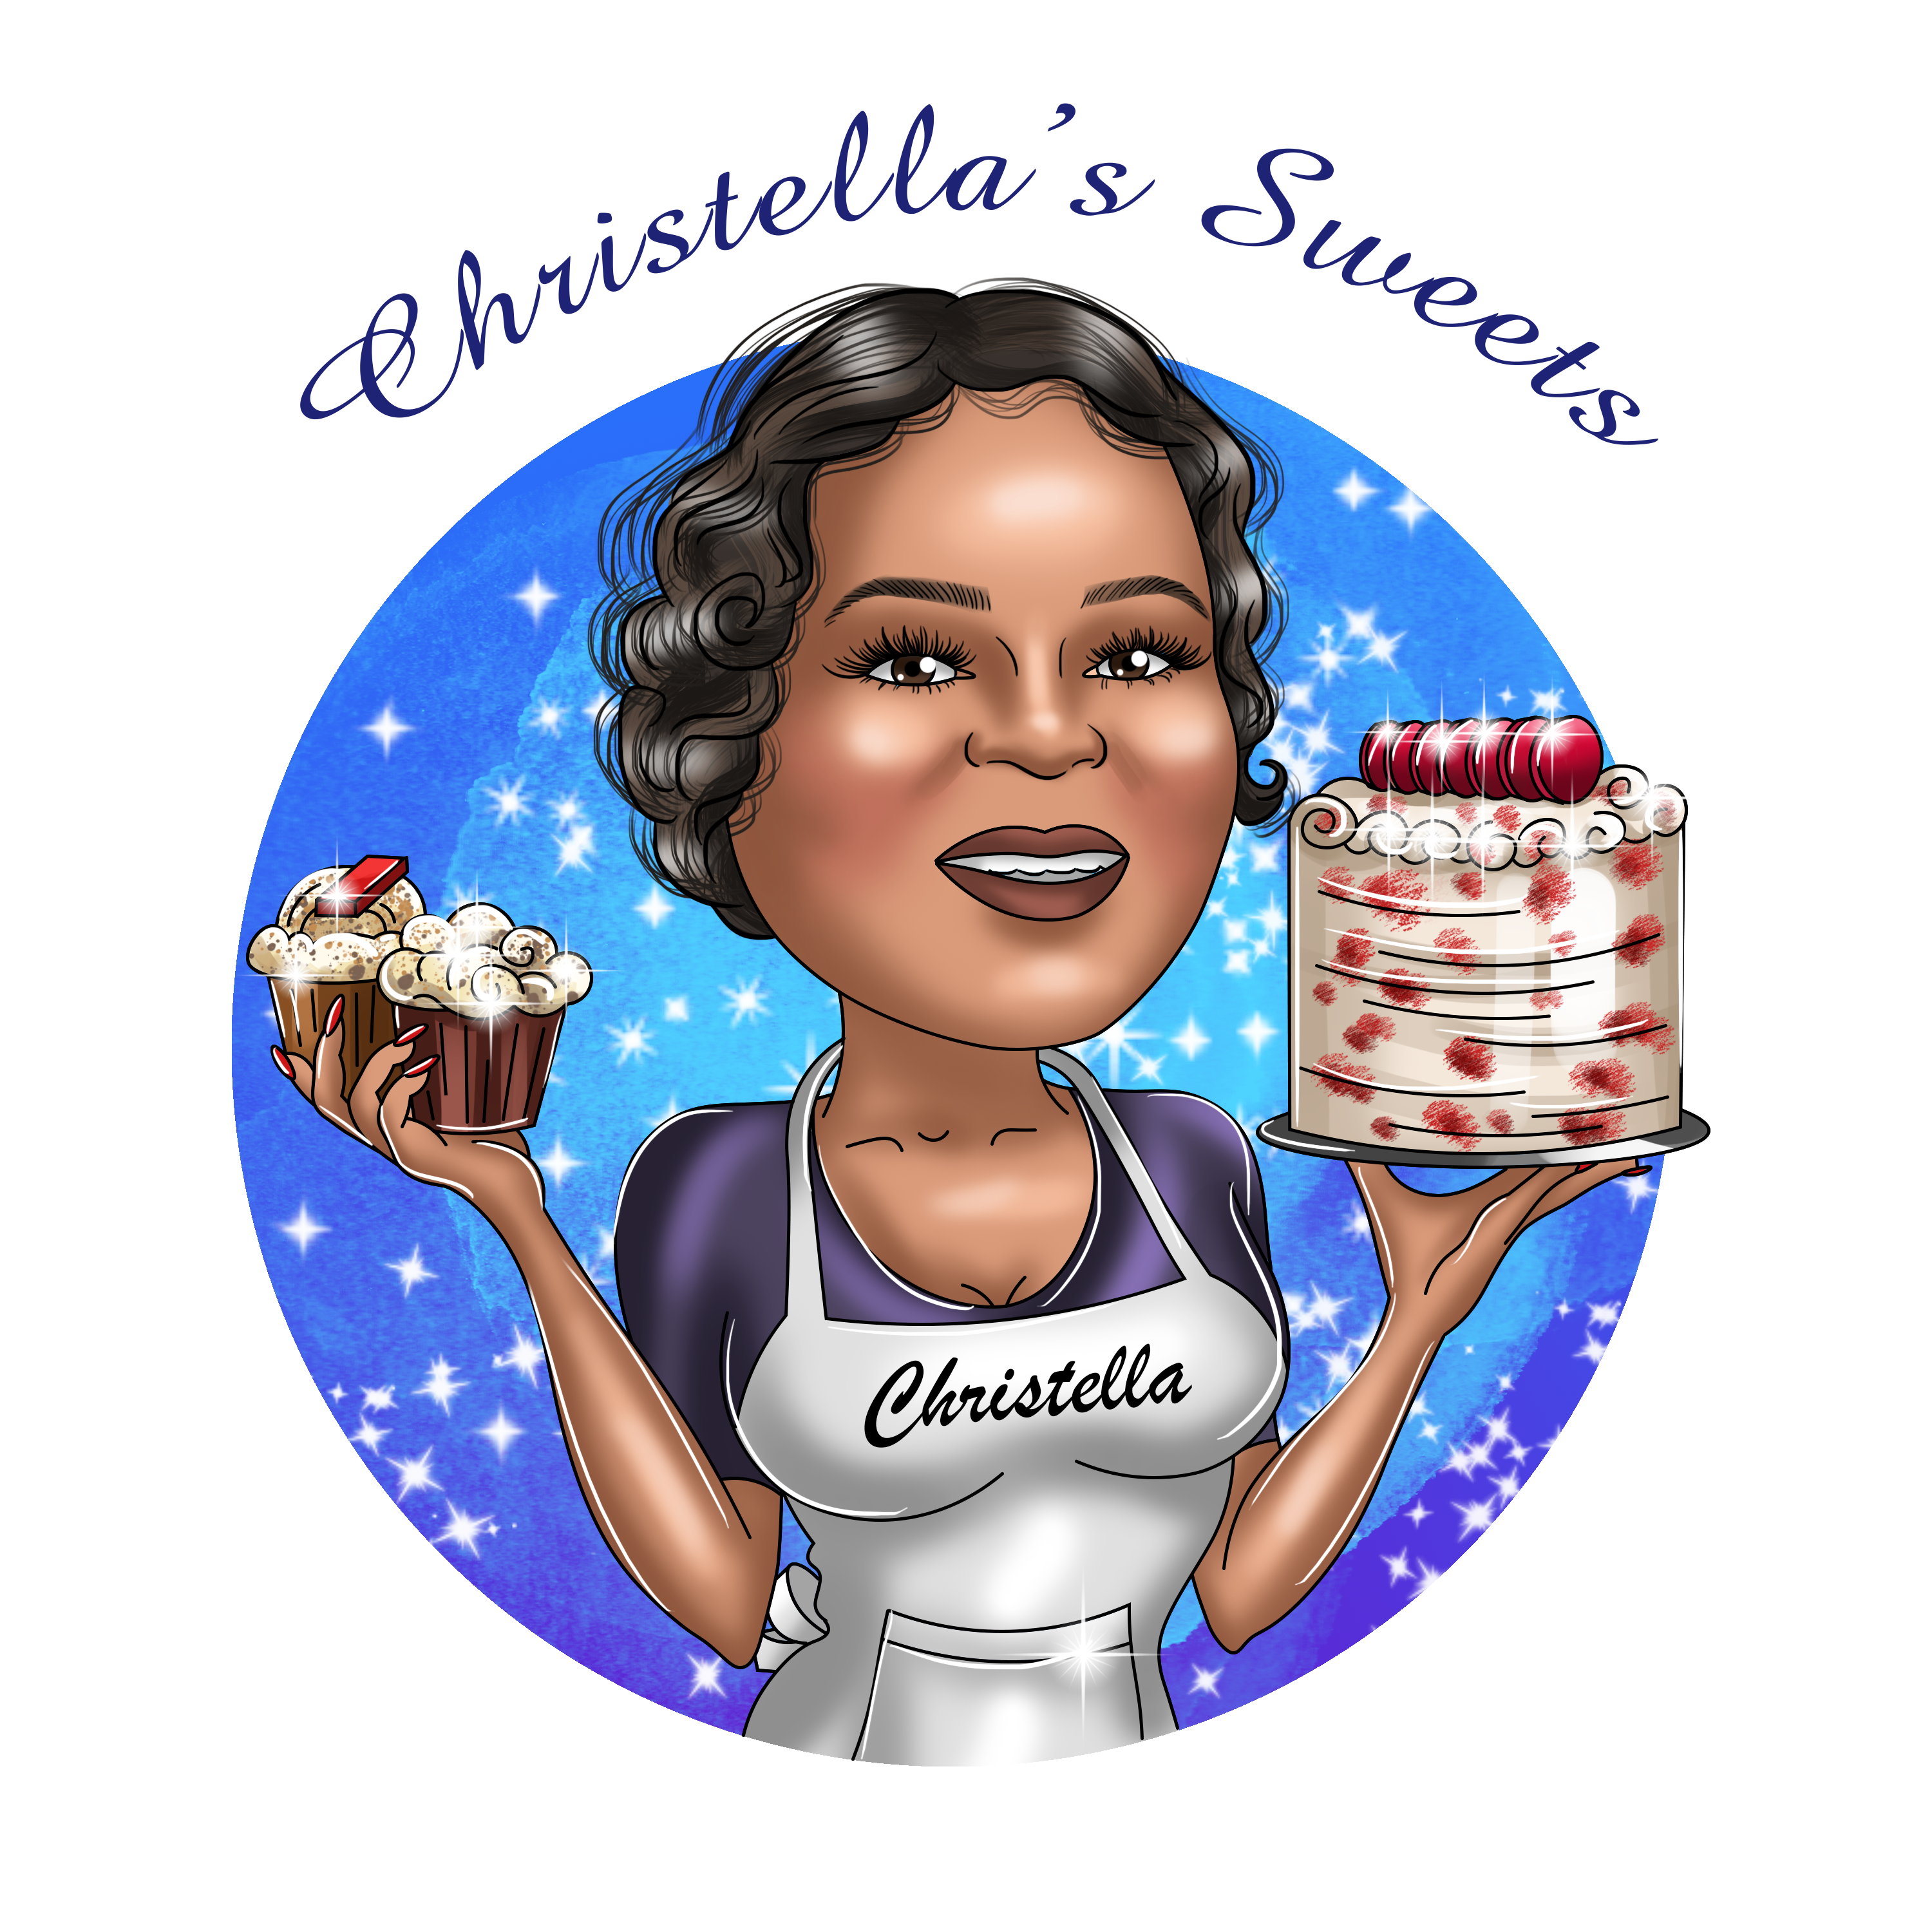 Christella’s Sweets